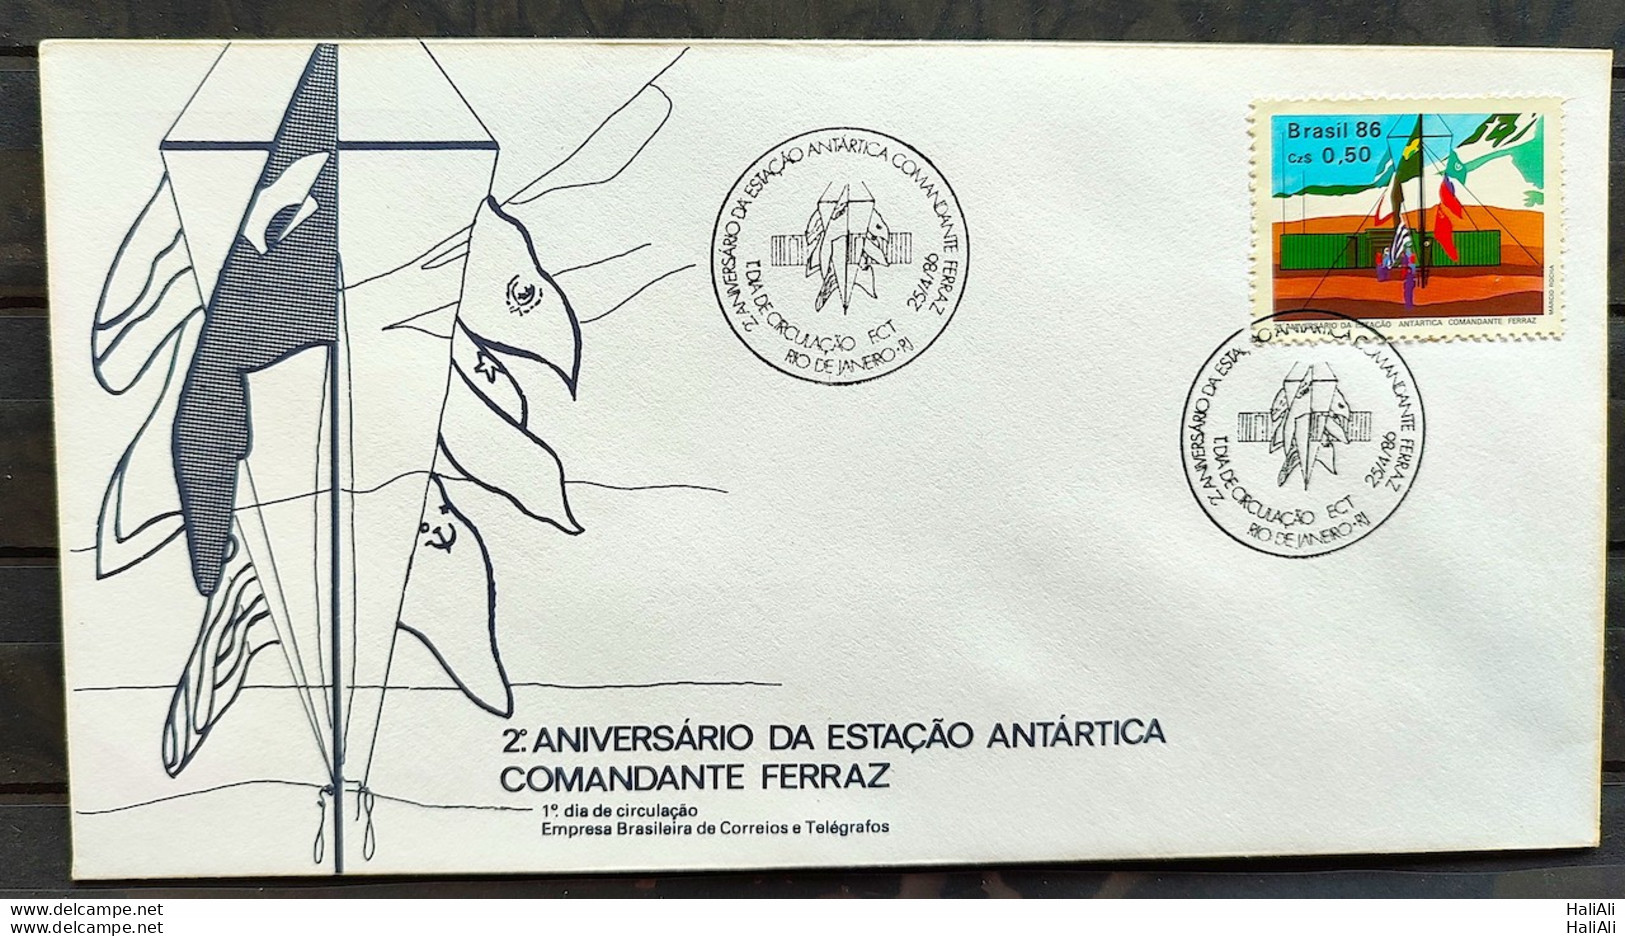 Brazil Envelope FDC 391 1986 Antarctic Station Commander Ferraz Bandeira CBC RJ 01 - FDC